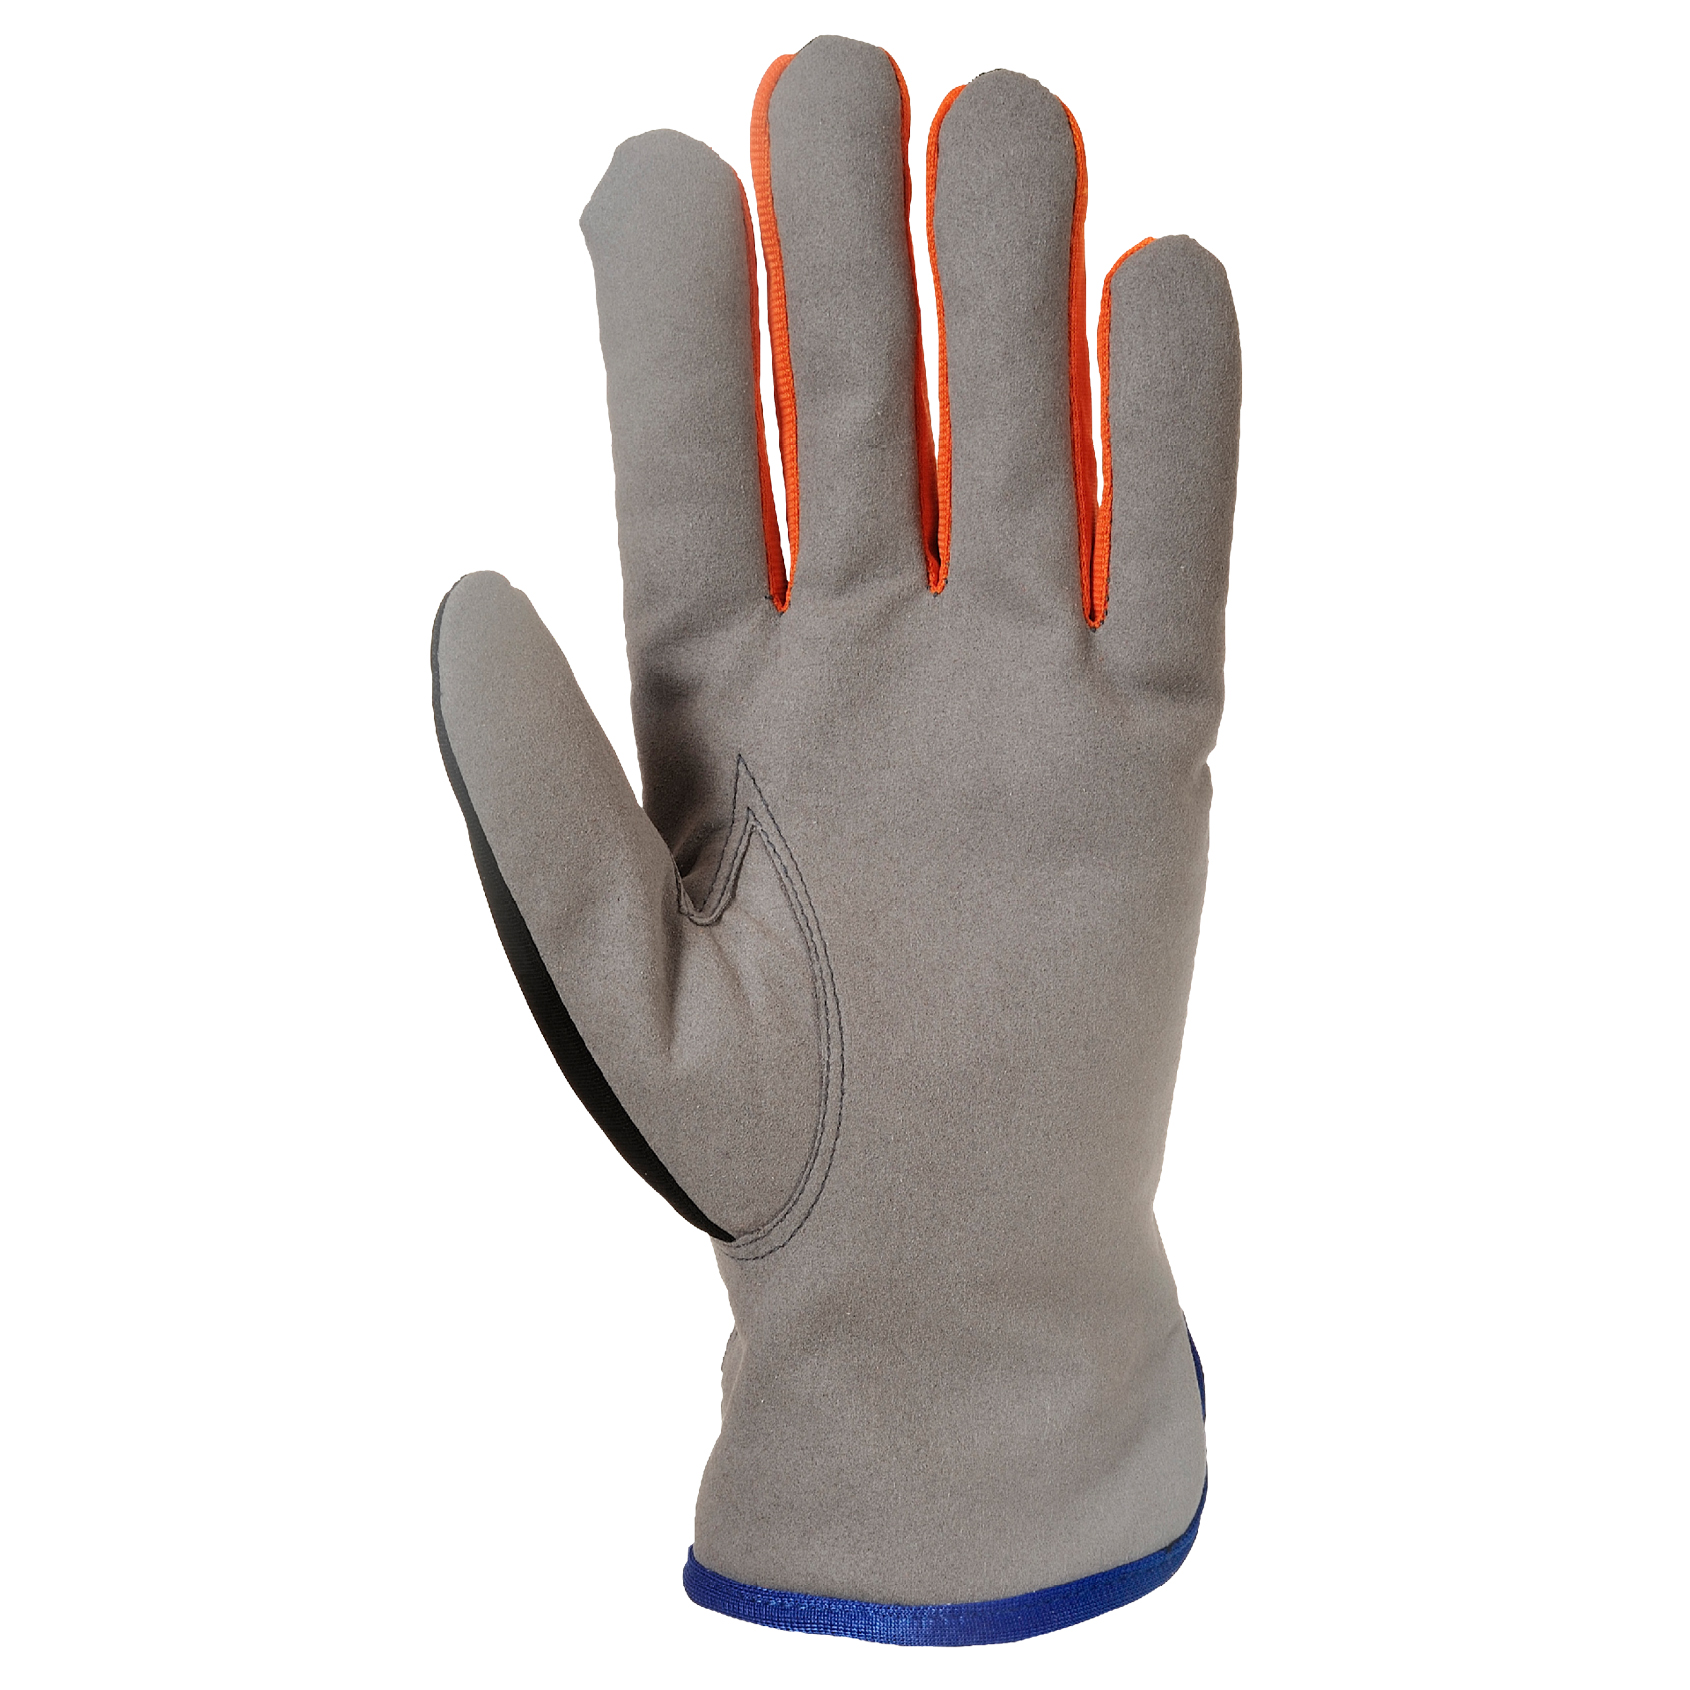 A280 - Wintershield Glove